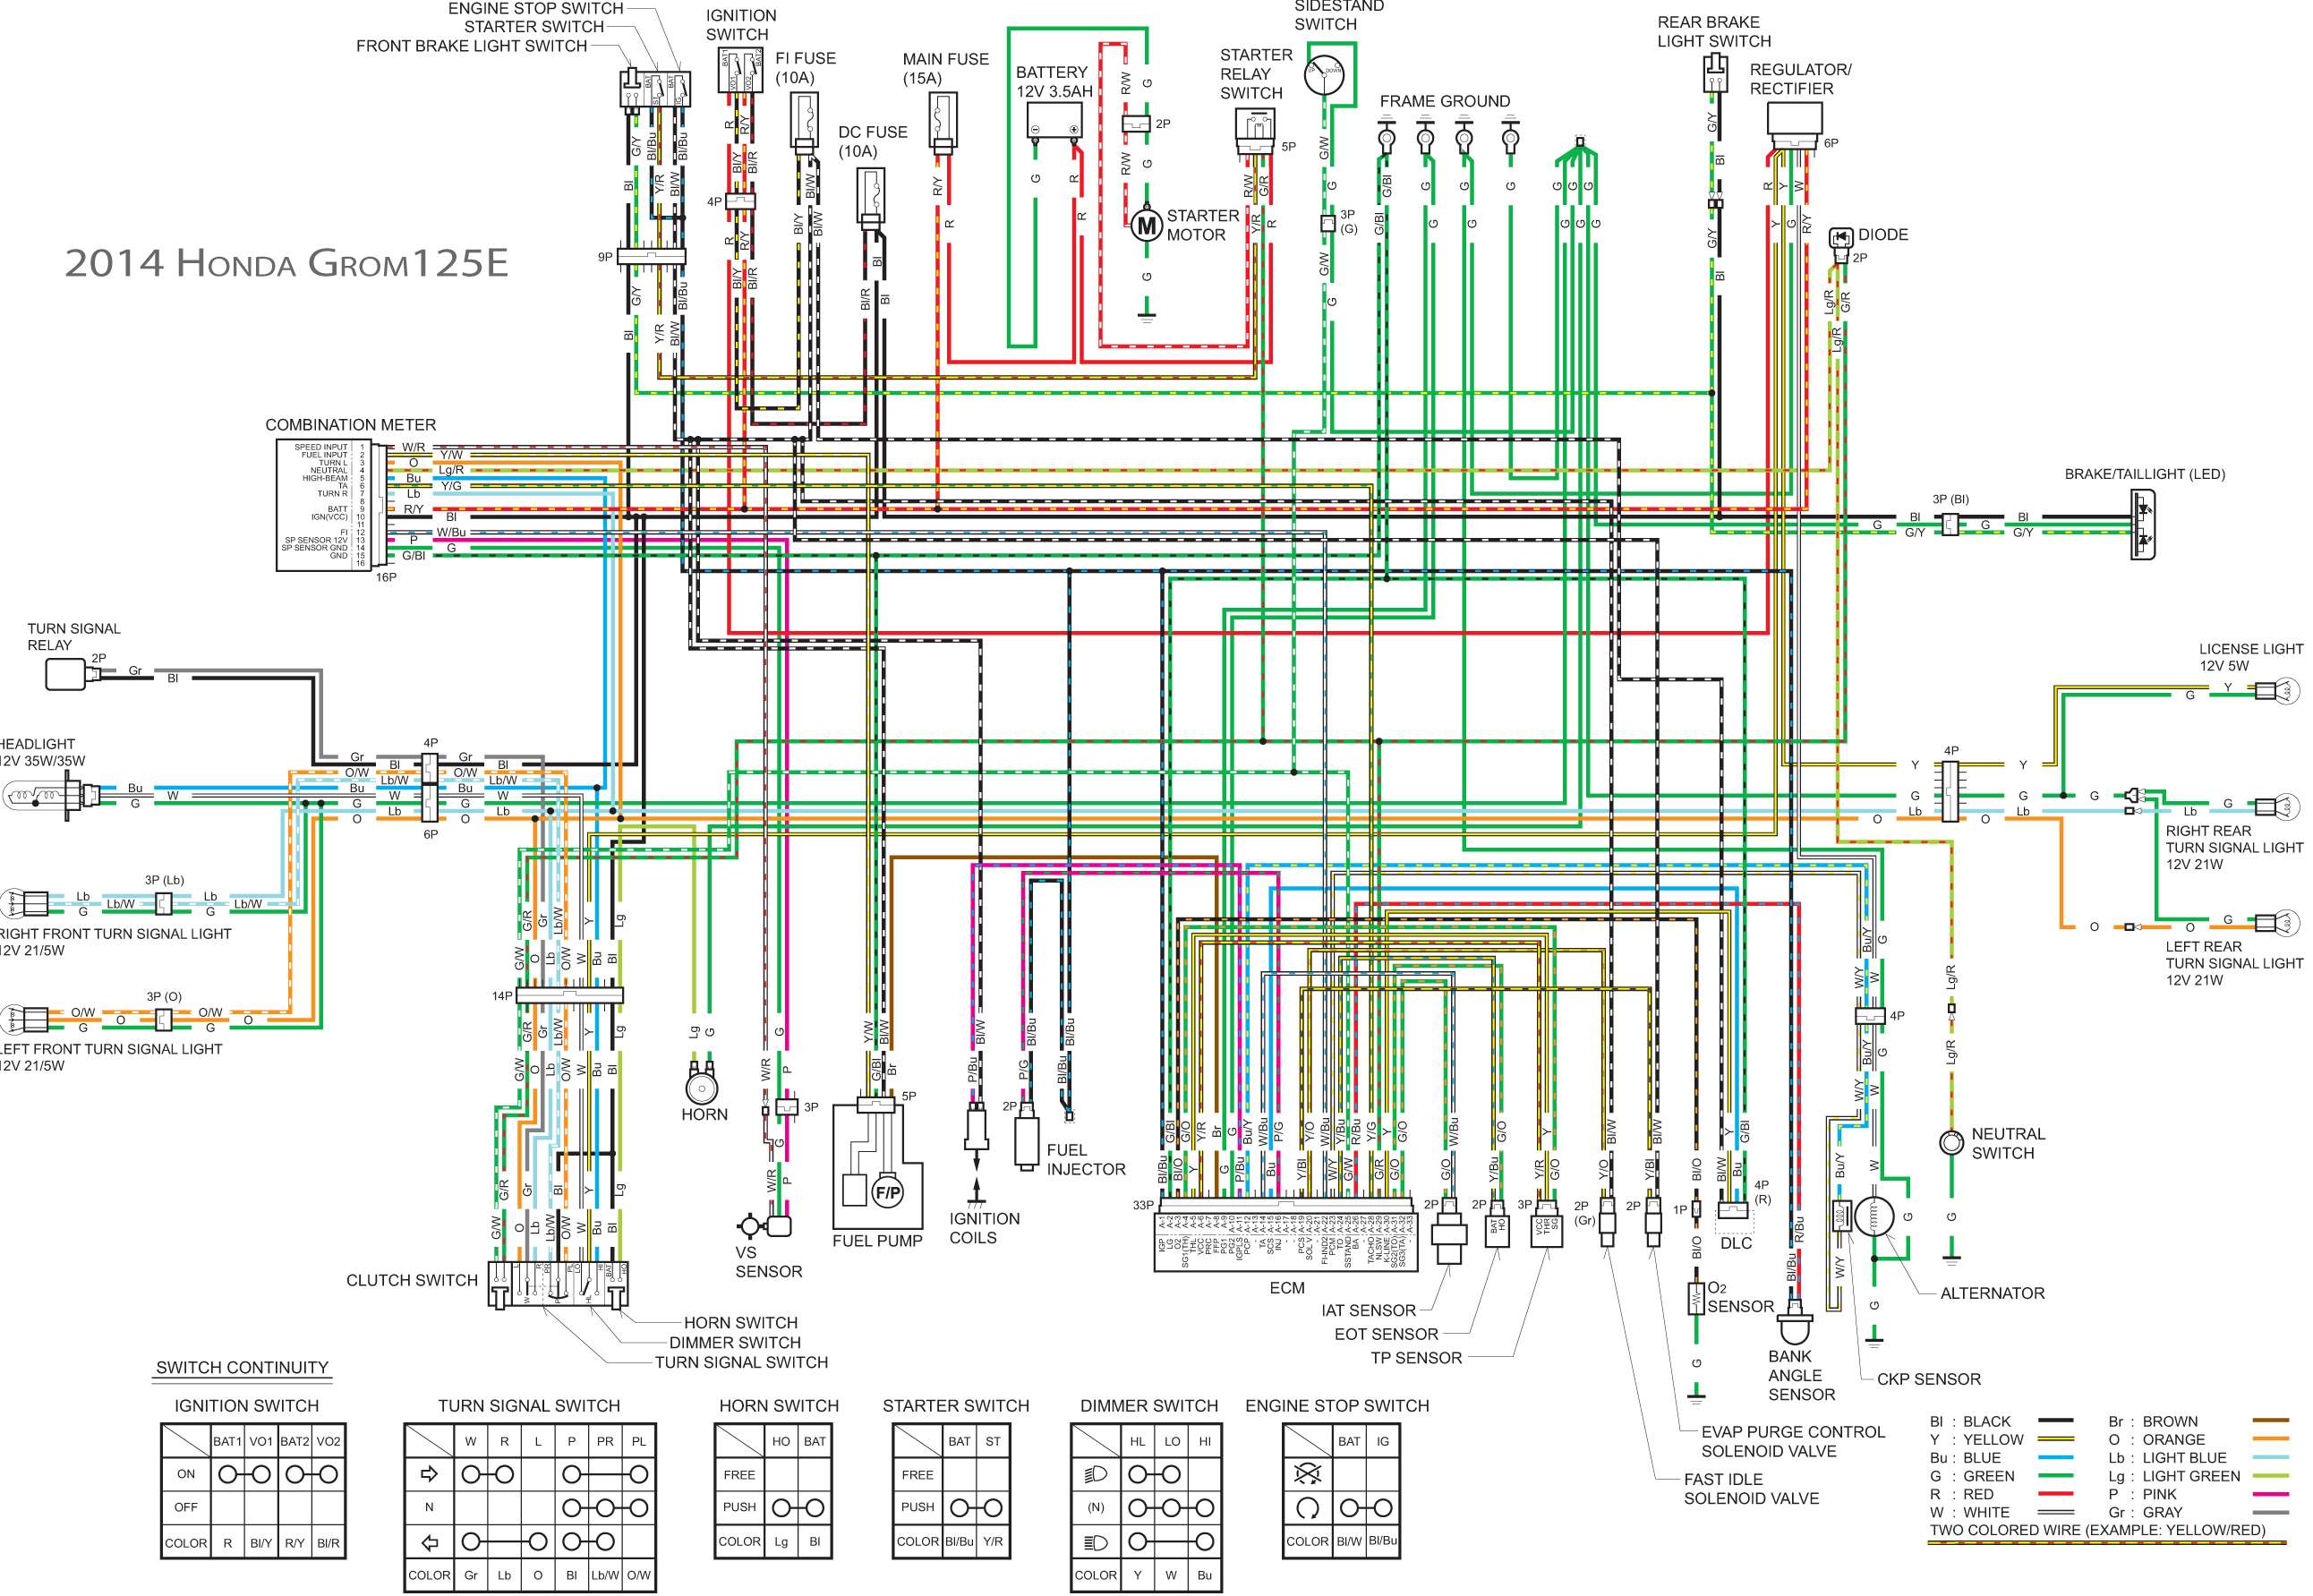 Honda Accord 2014 Wiring Diagram from imagizer-cv.imageshack.us